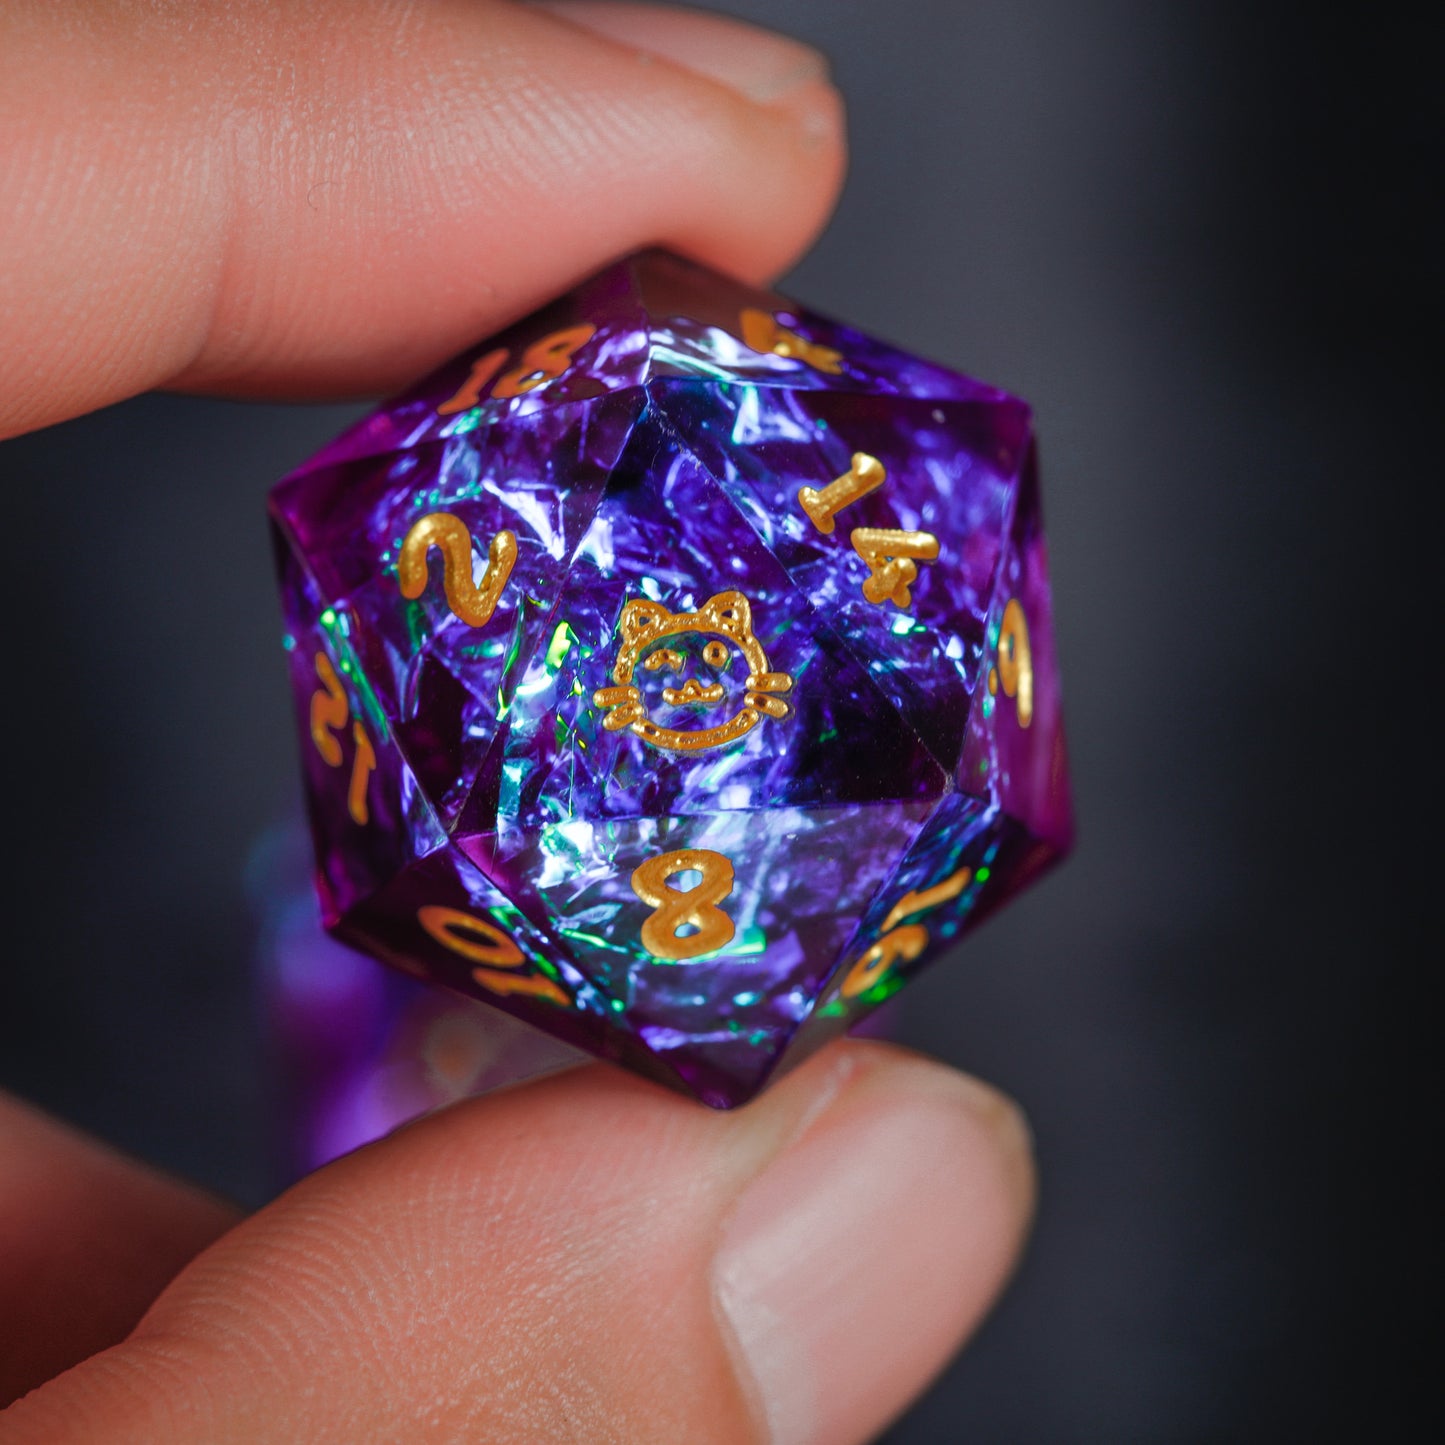 Purple Glitter Resin Galaxy Dice Cat Butt DnD D&D Dice Set - CrystalMaggie